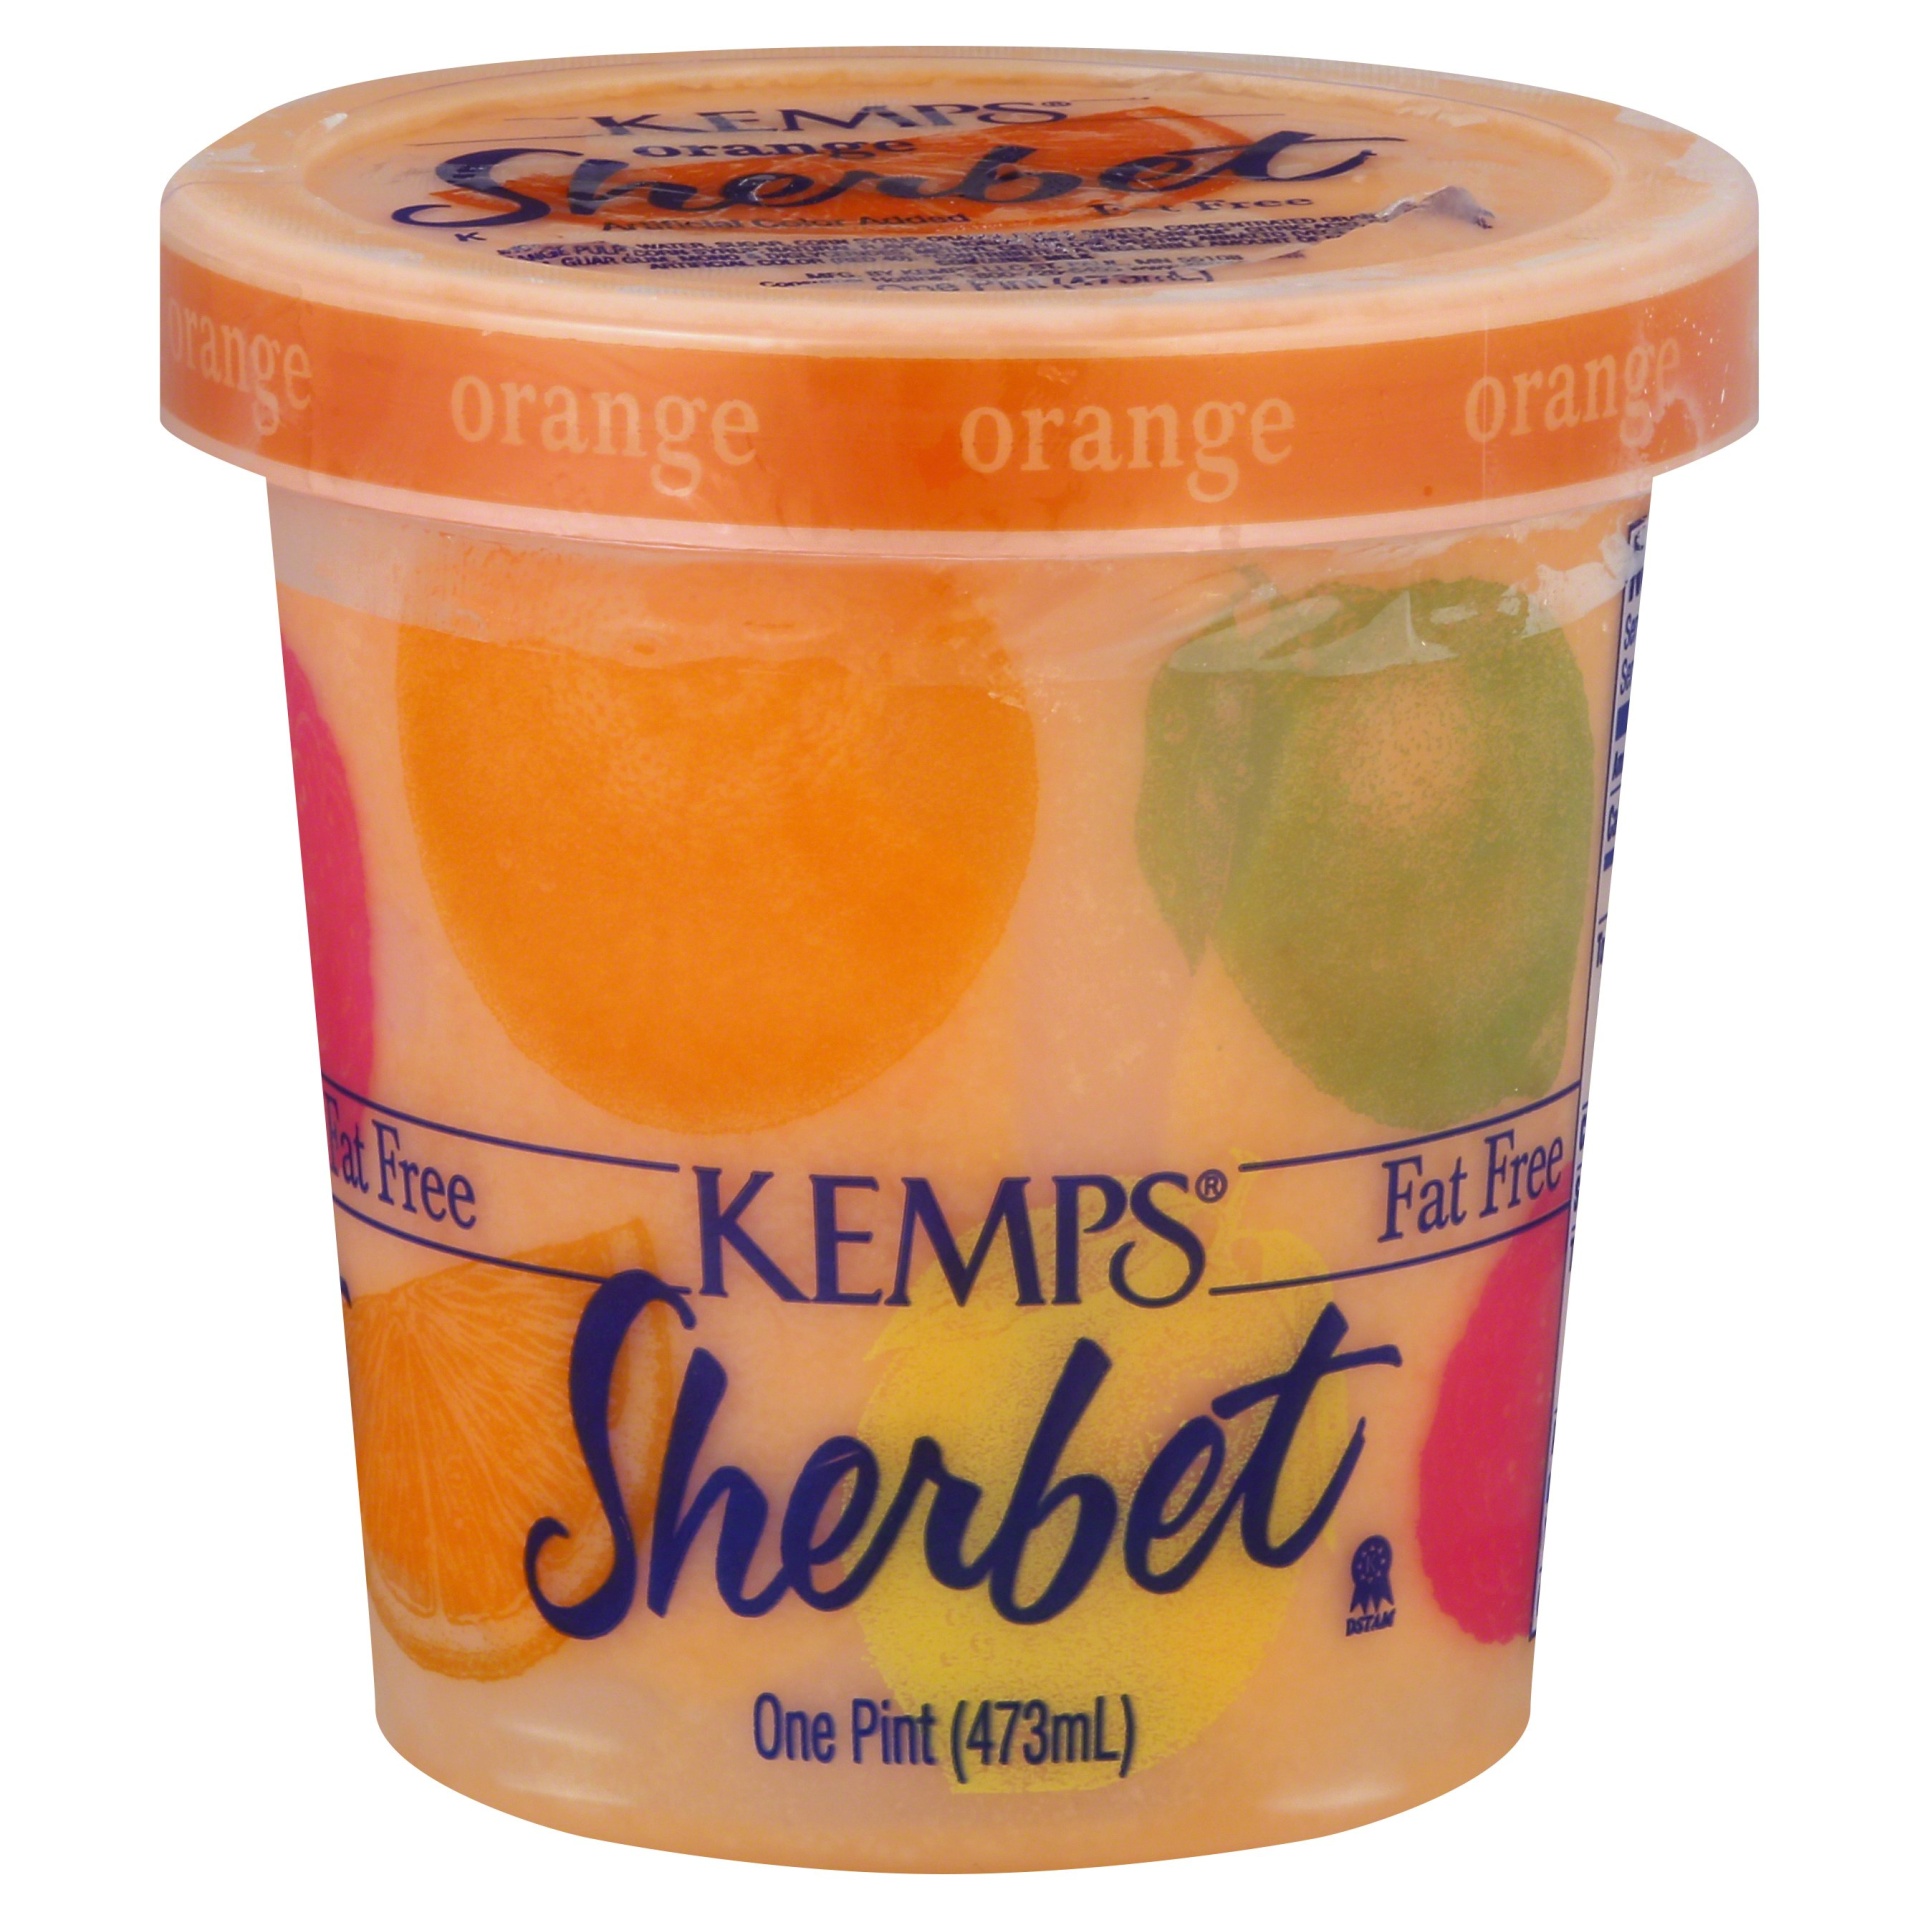 slide 1 of 6, Kemps Fat Free Orange Sherbet, 1 pint